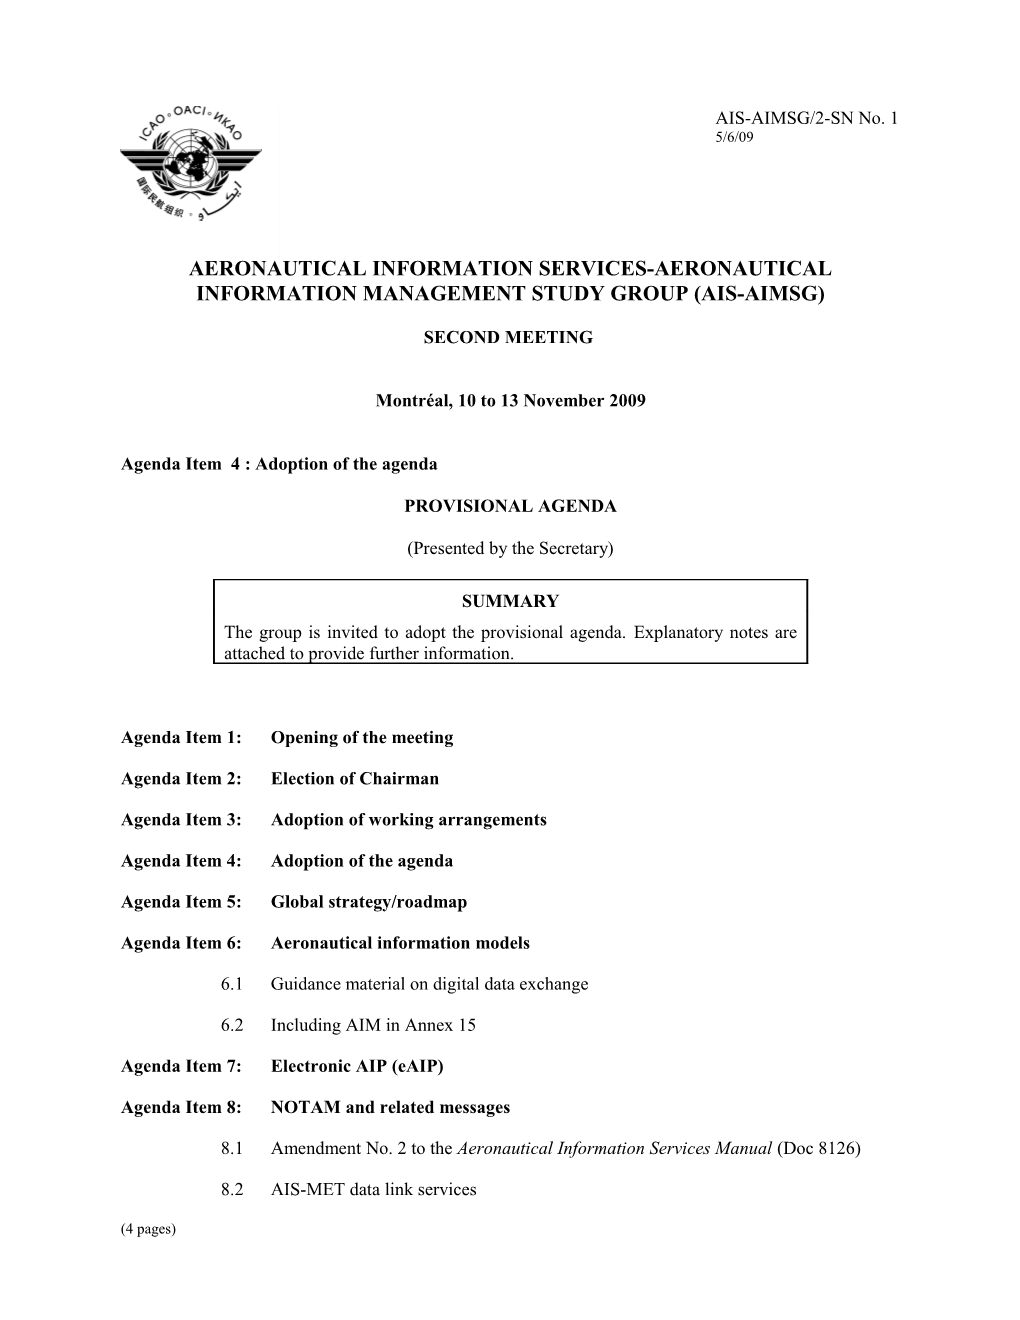 Aeronautical Information Services-Aeronautical Information Management Study Group (Ais-Aimsg)